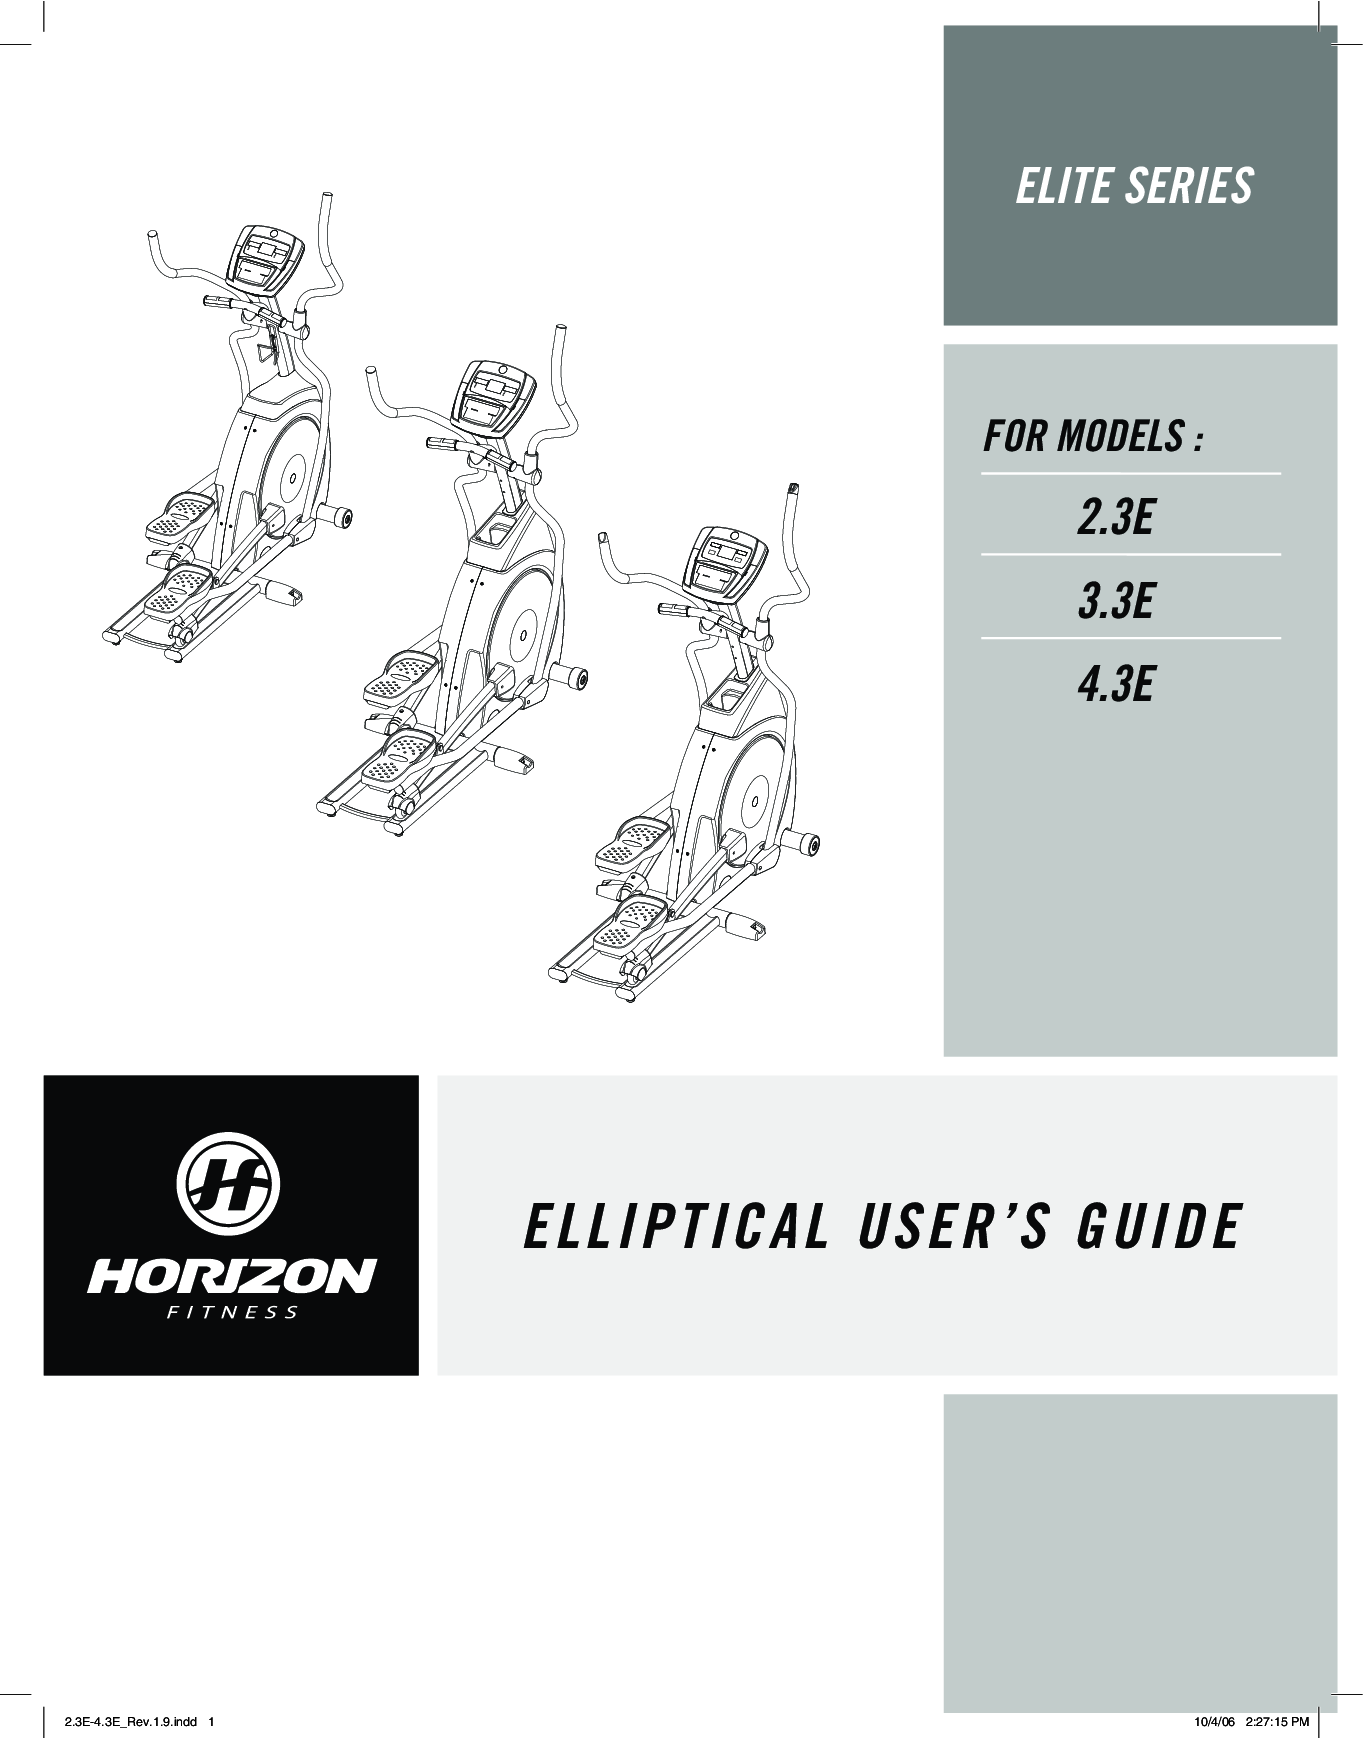 Horizon Fitness ELITE 3.3E, ELITE 2.3E, ELITE 4.3E User Manual